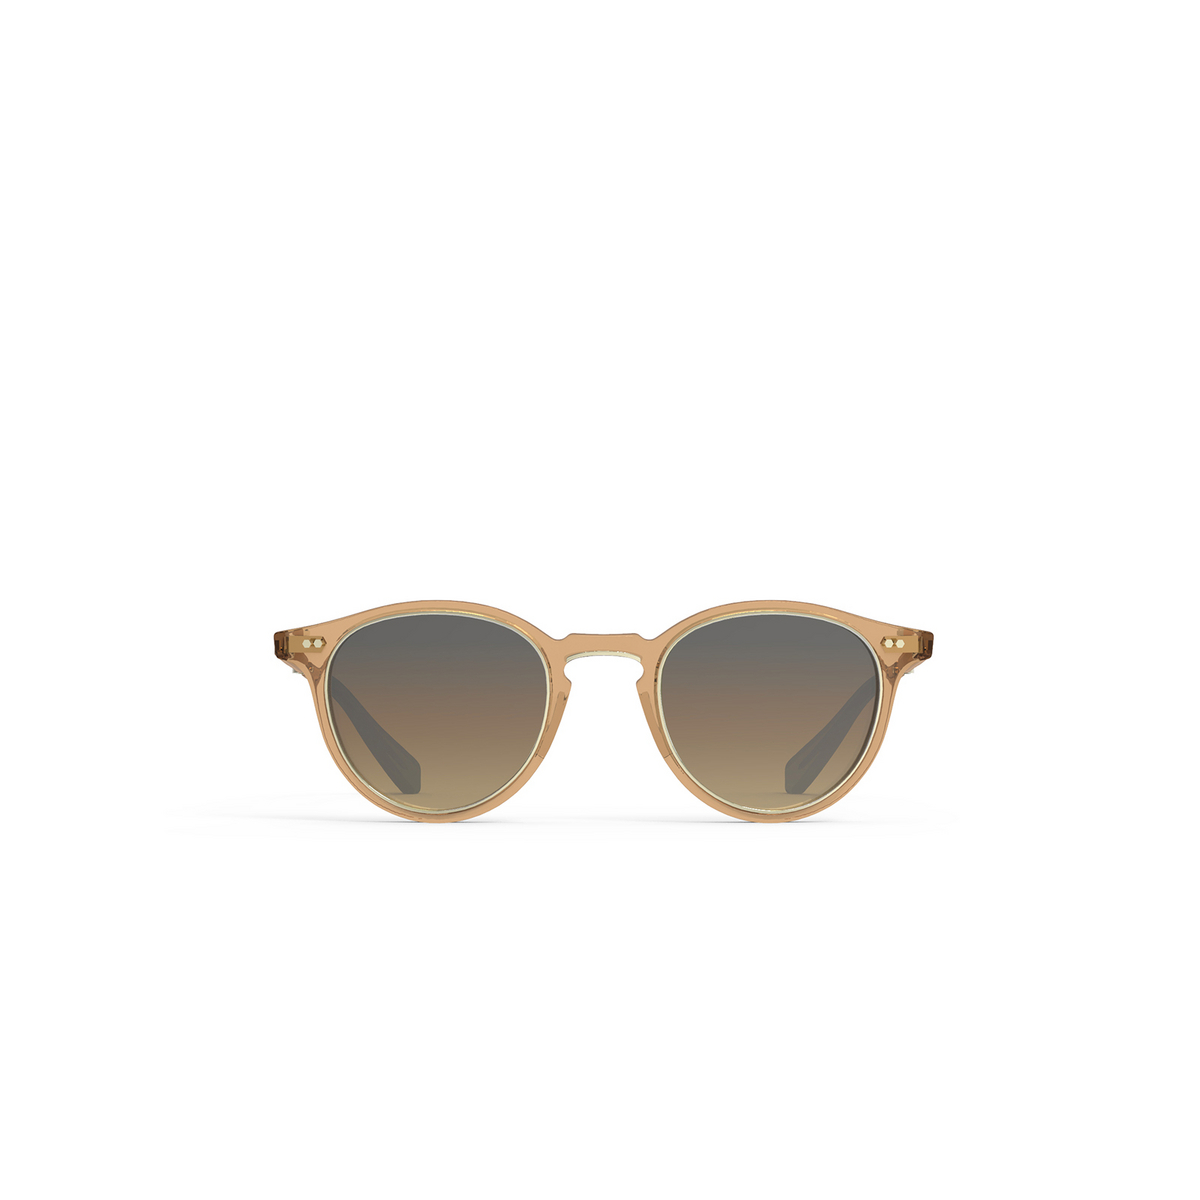 Mr. Leight MARMONT II S Sunglasses TOP-12KG/SMKY Topaz-12K White Gold/Smokey - front view